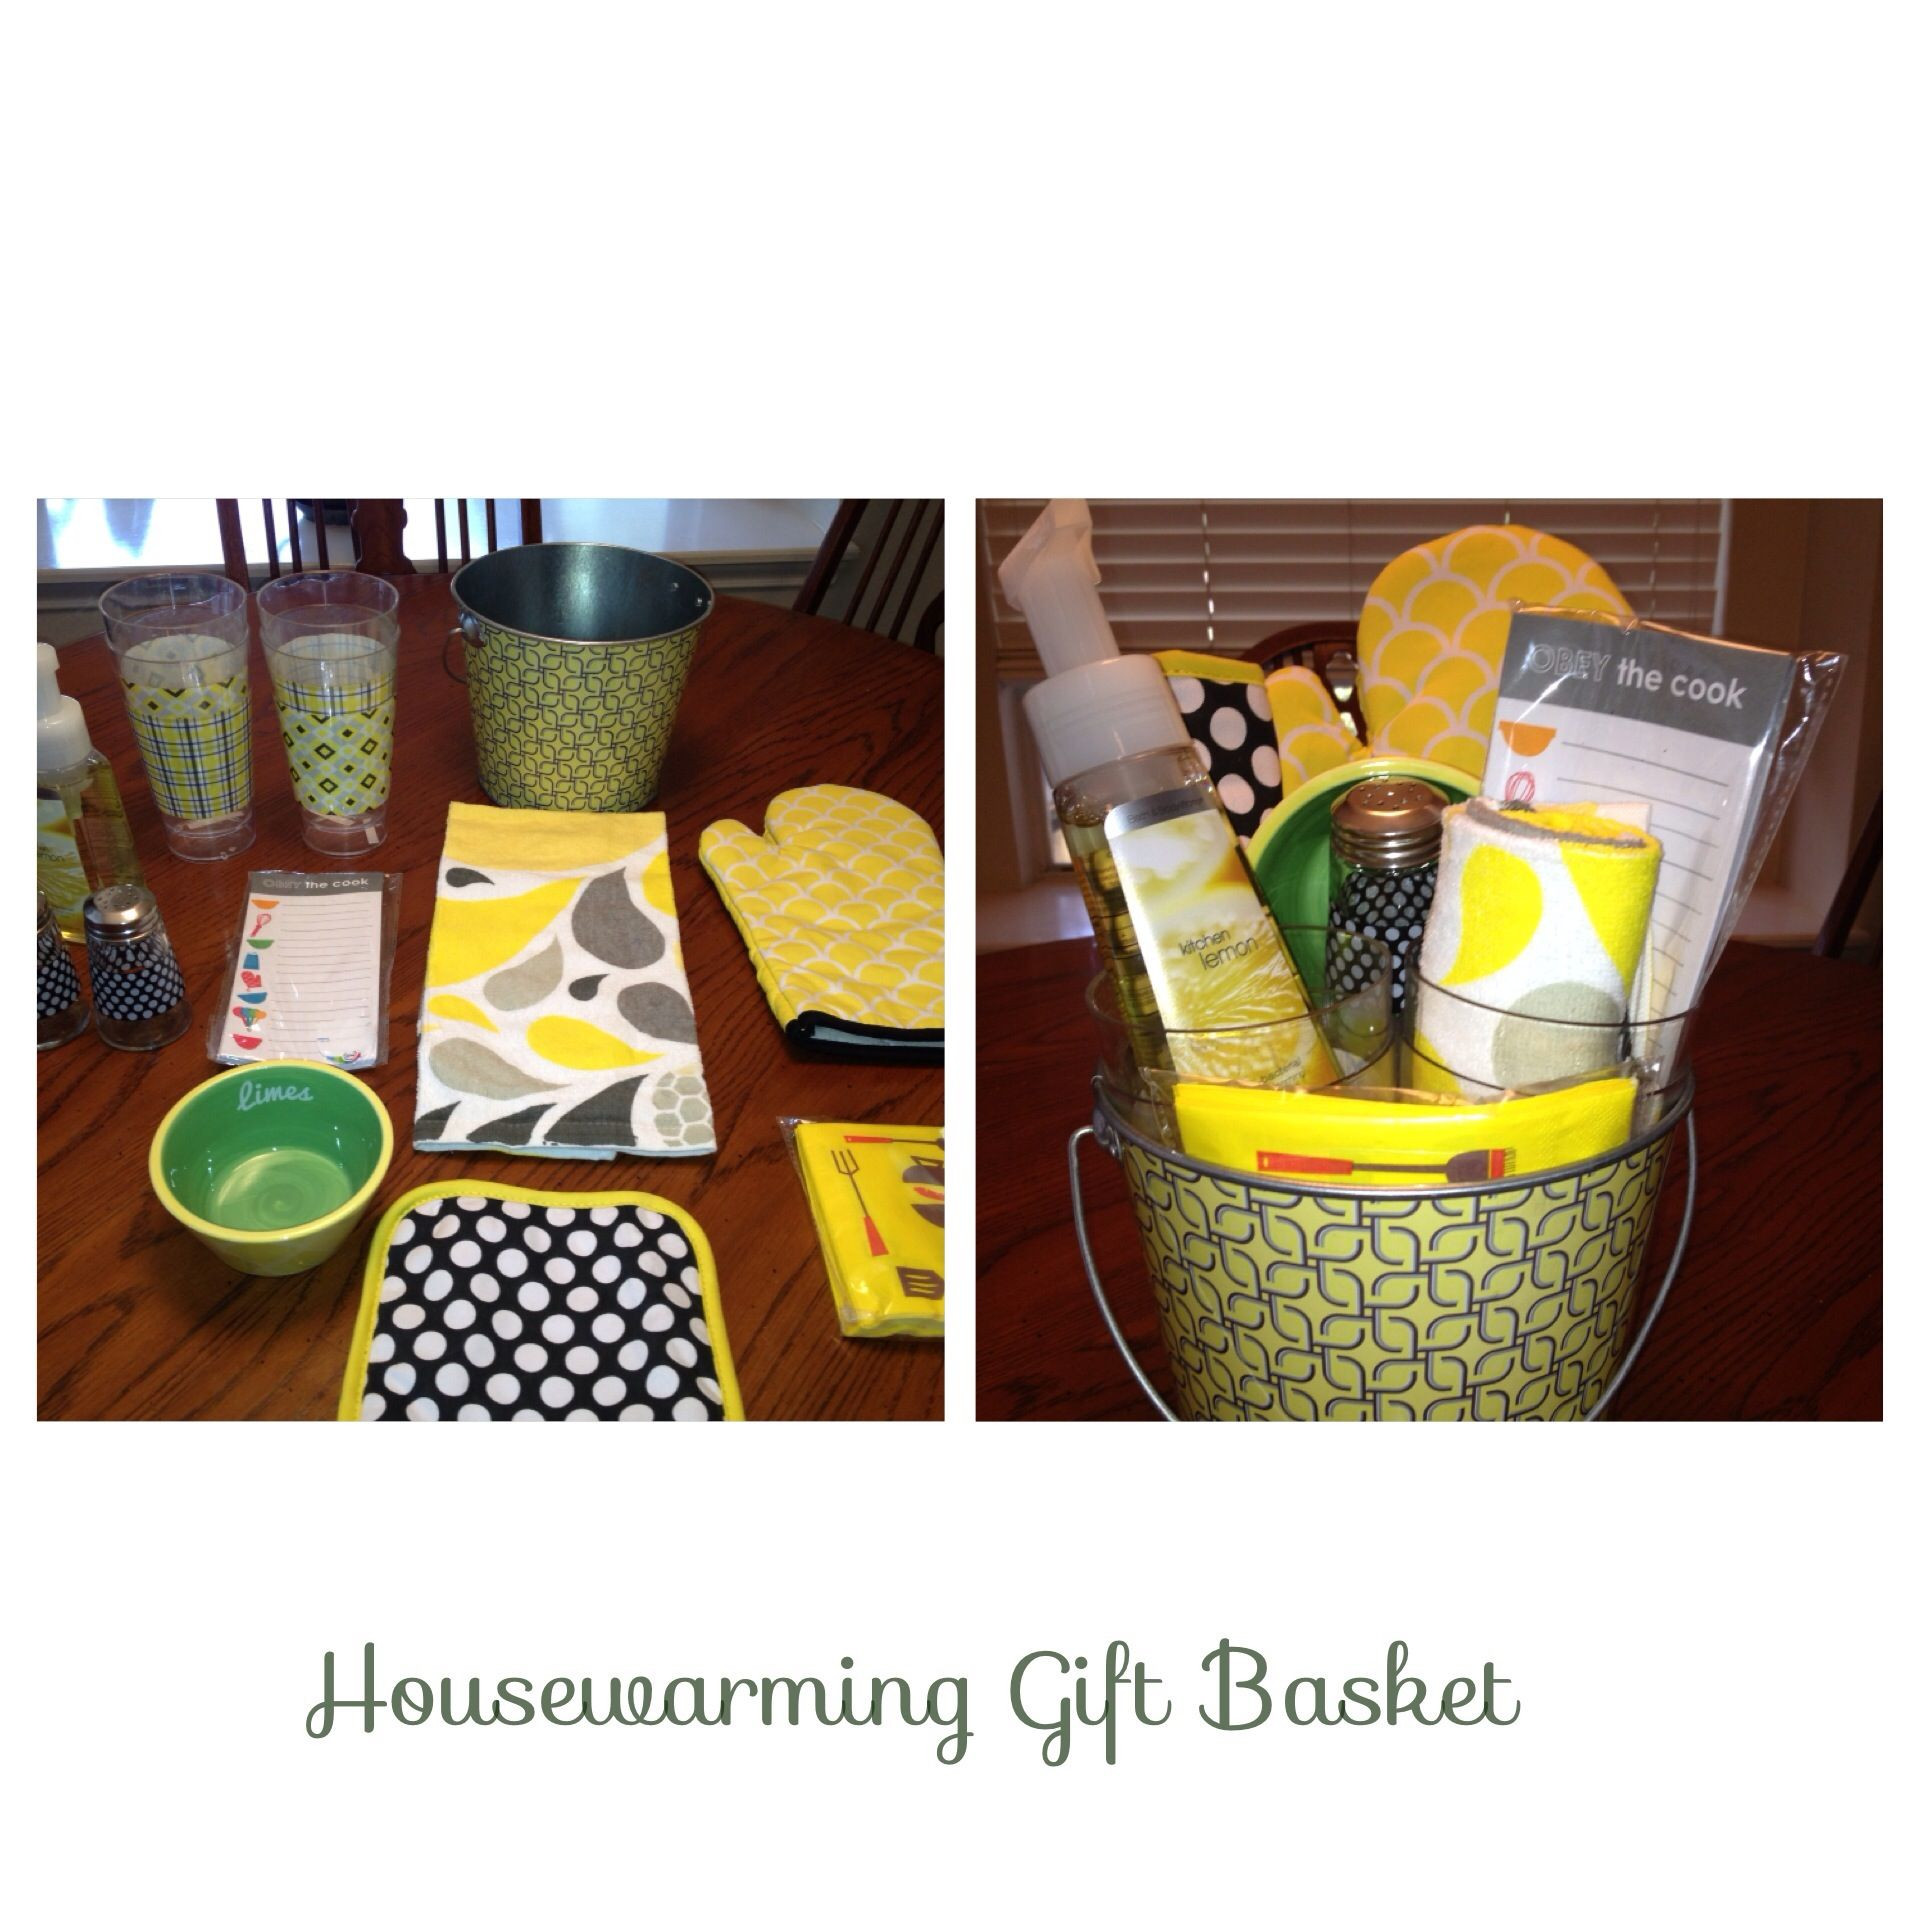 Bath And Body Works Gift Basket Ideas
 Housewarming t basket via hobby lobby tar & bath